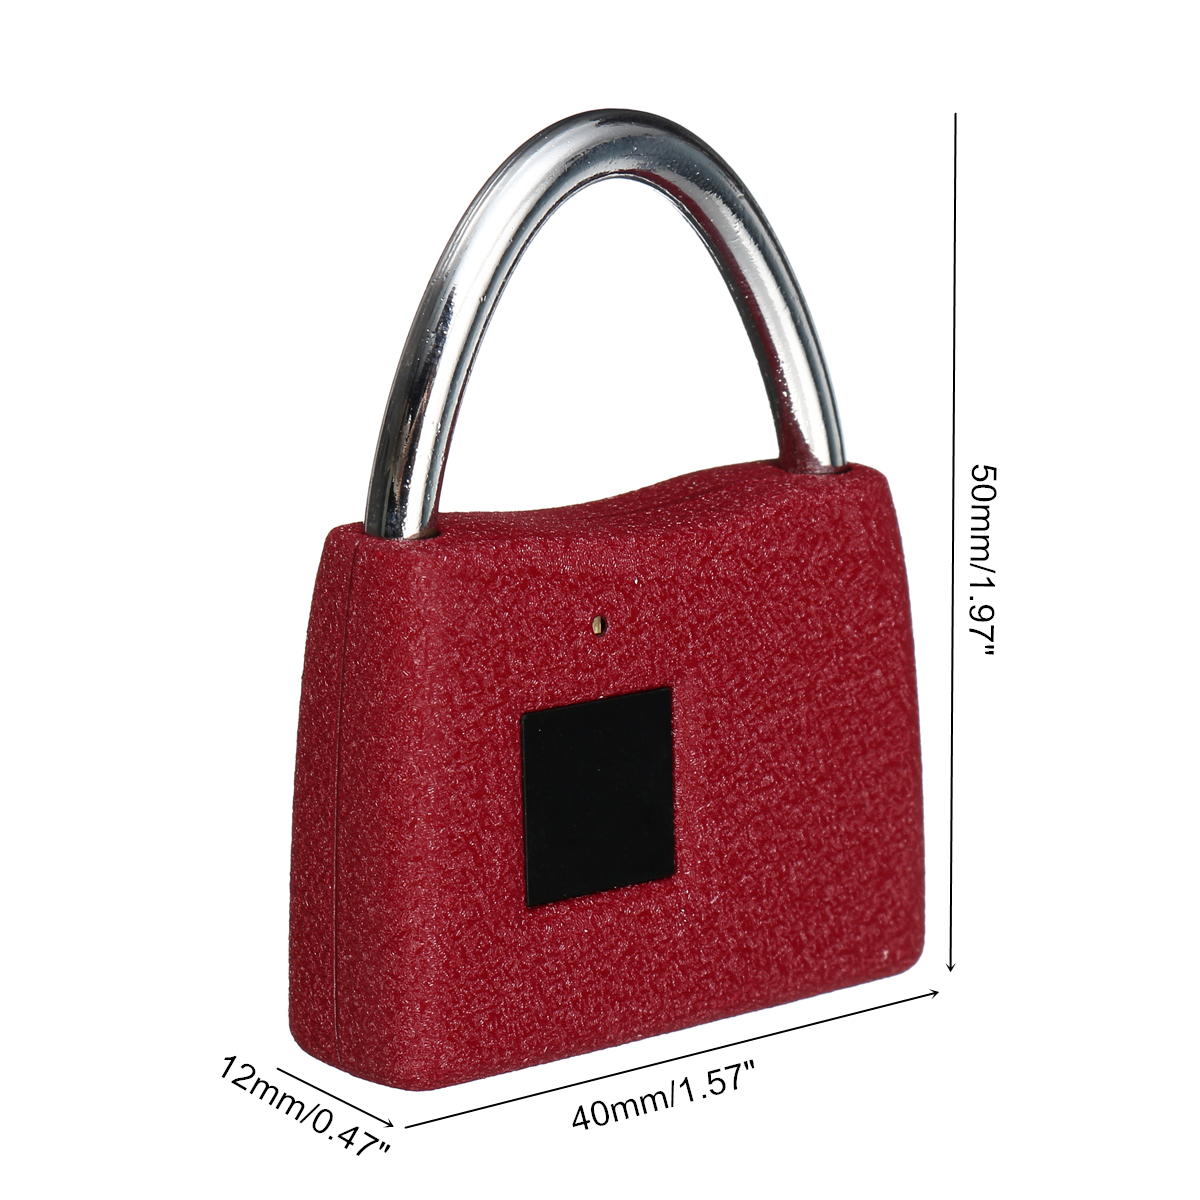 Portable-Smart-Keyless-Luggage-Door-Lock-Anti-Theft-Fingerprint-Security-Padlock-1456418-5